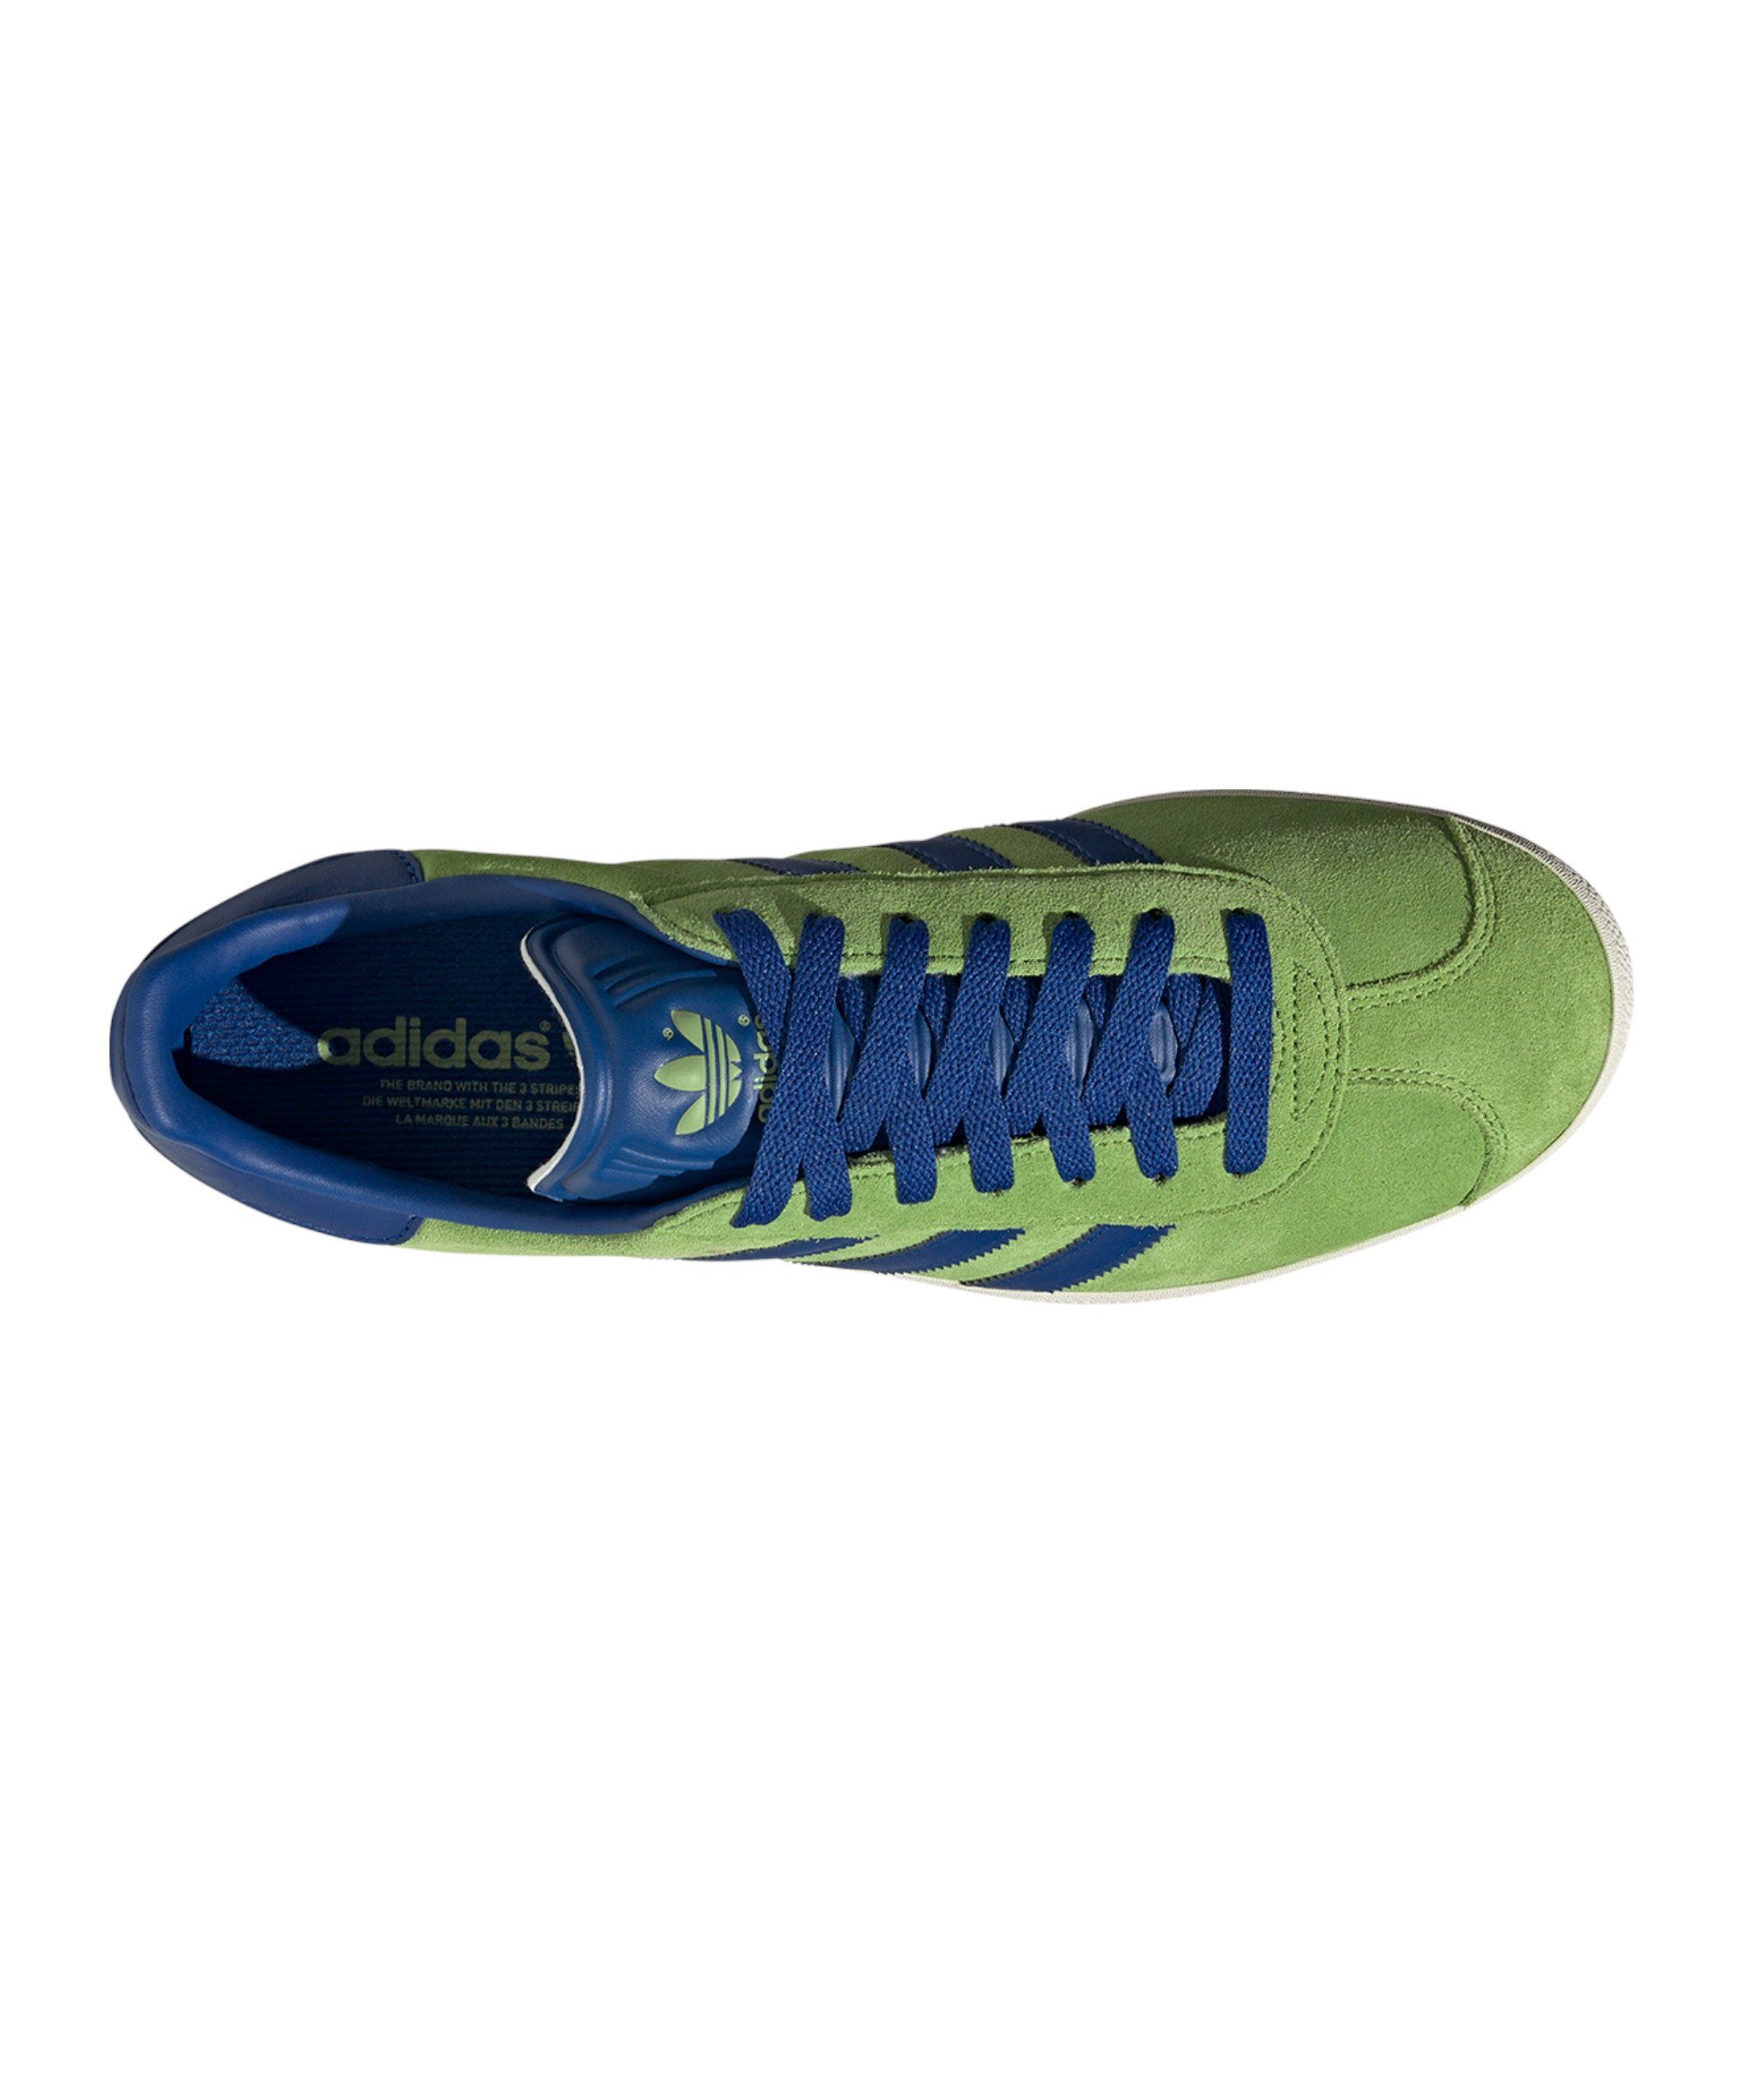 adidas Originals gruenblauweiss Gazelle Sneaker